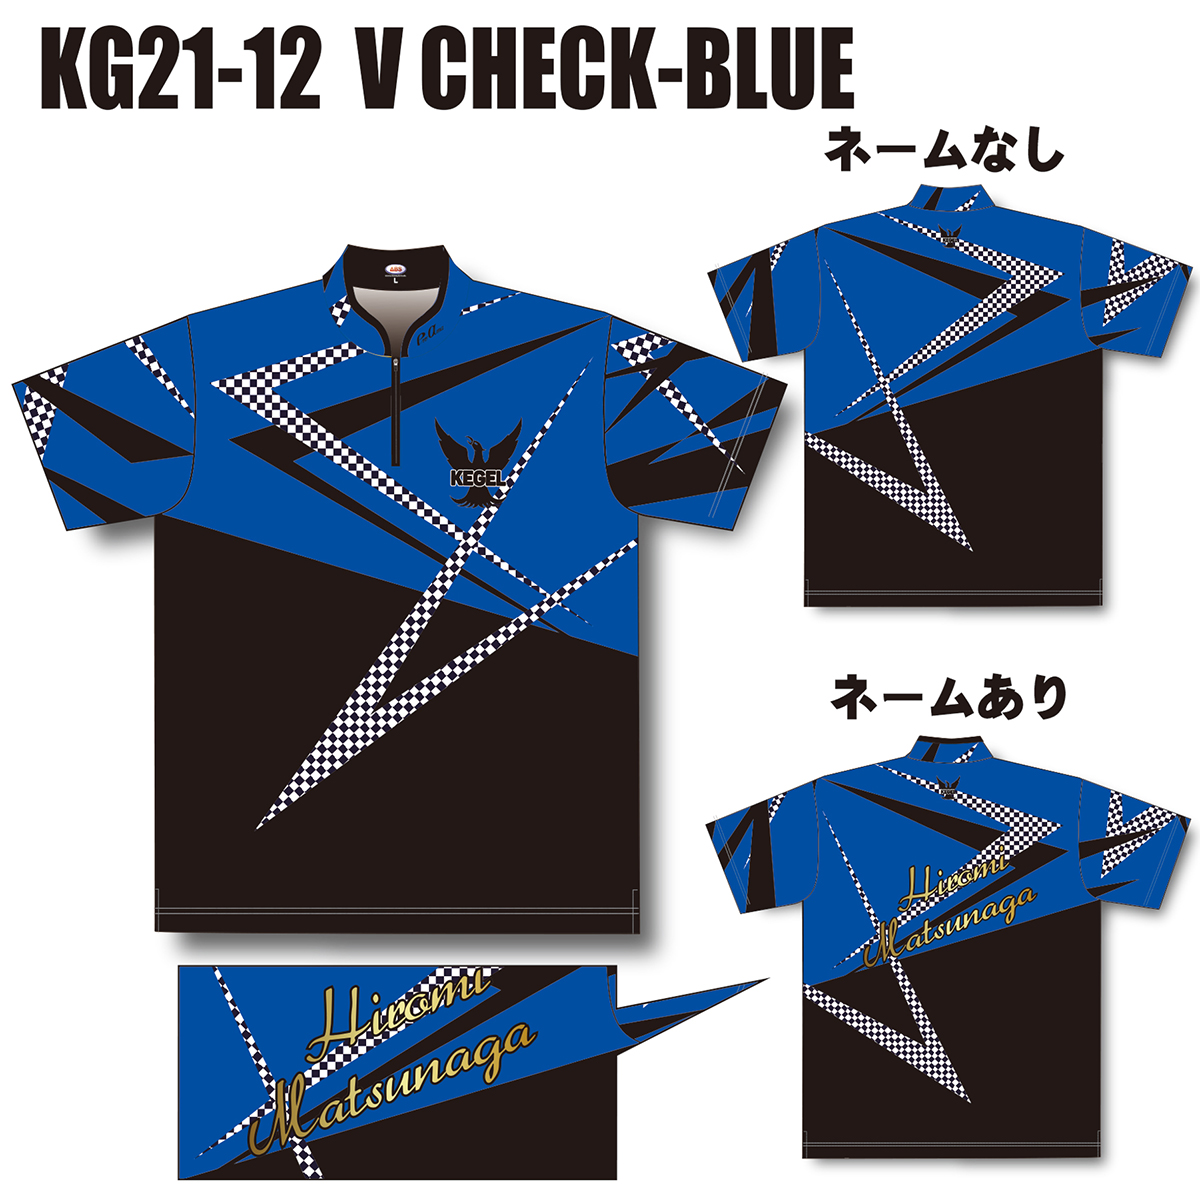 KEGEL KG21-12(V CHECK-BLUE)